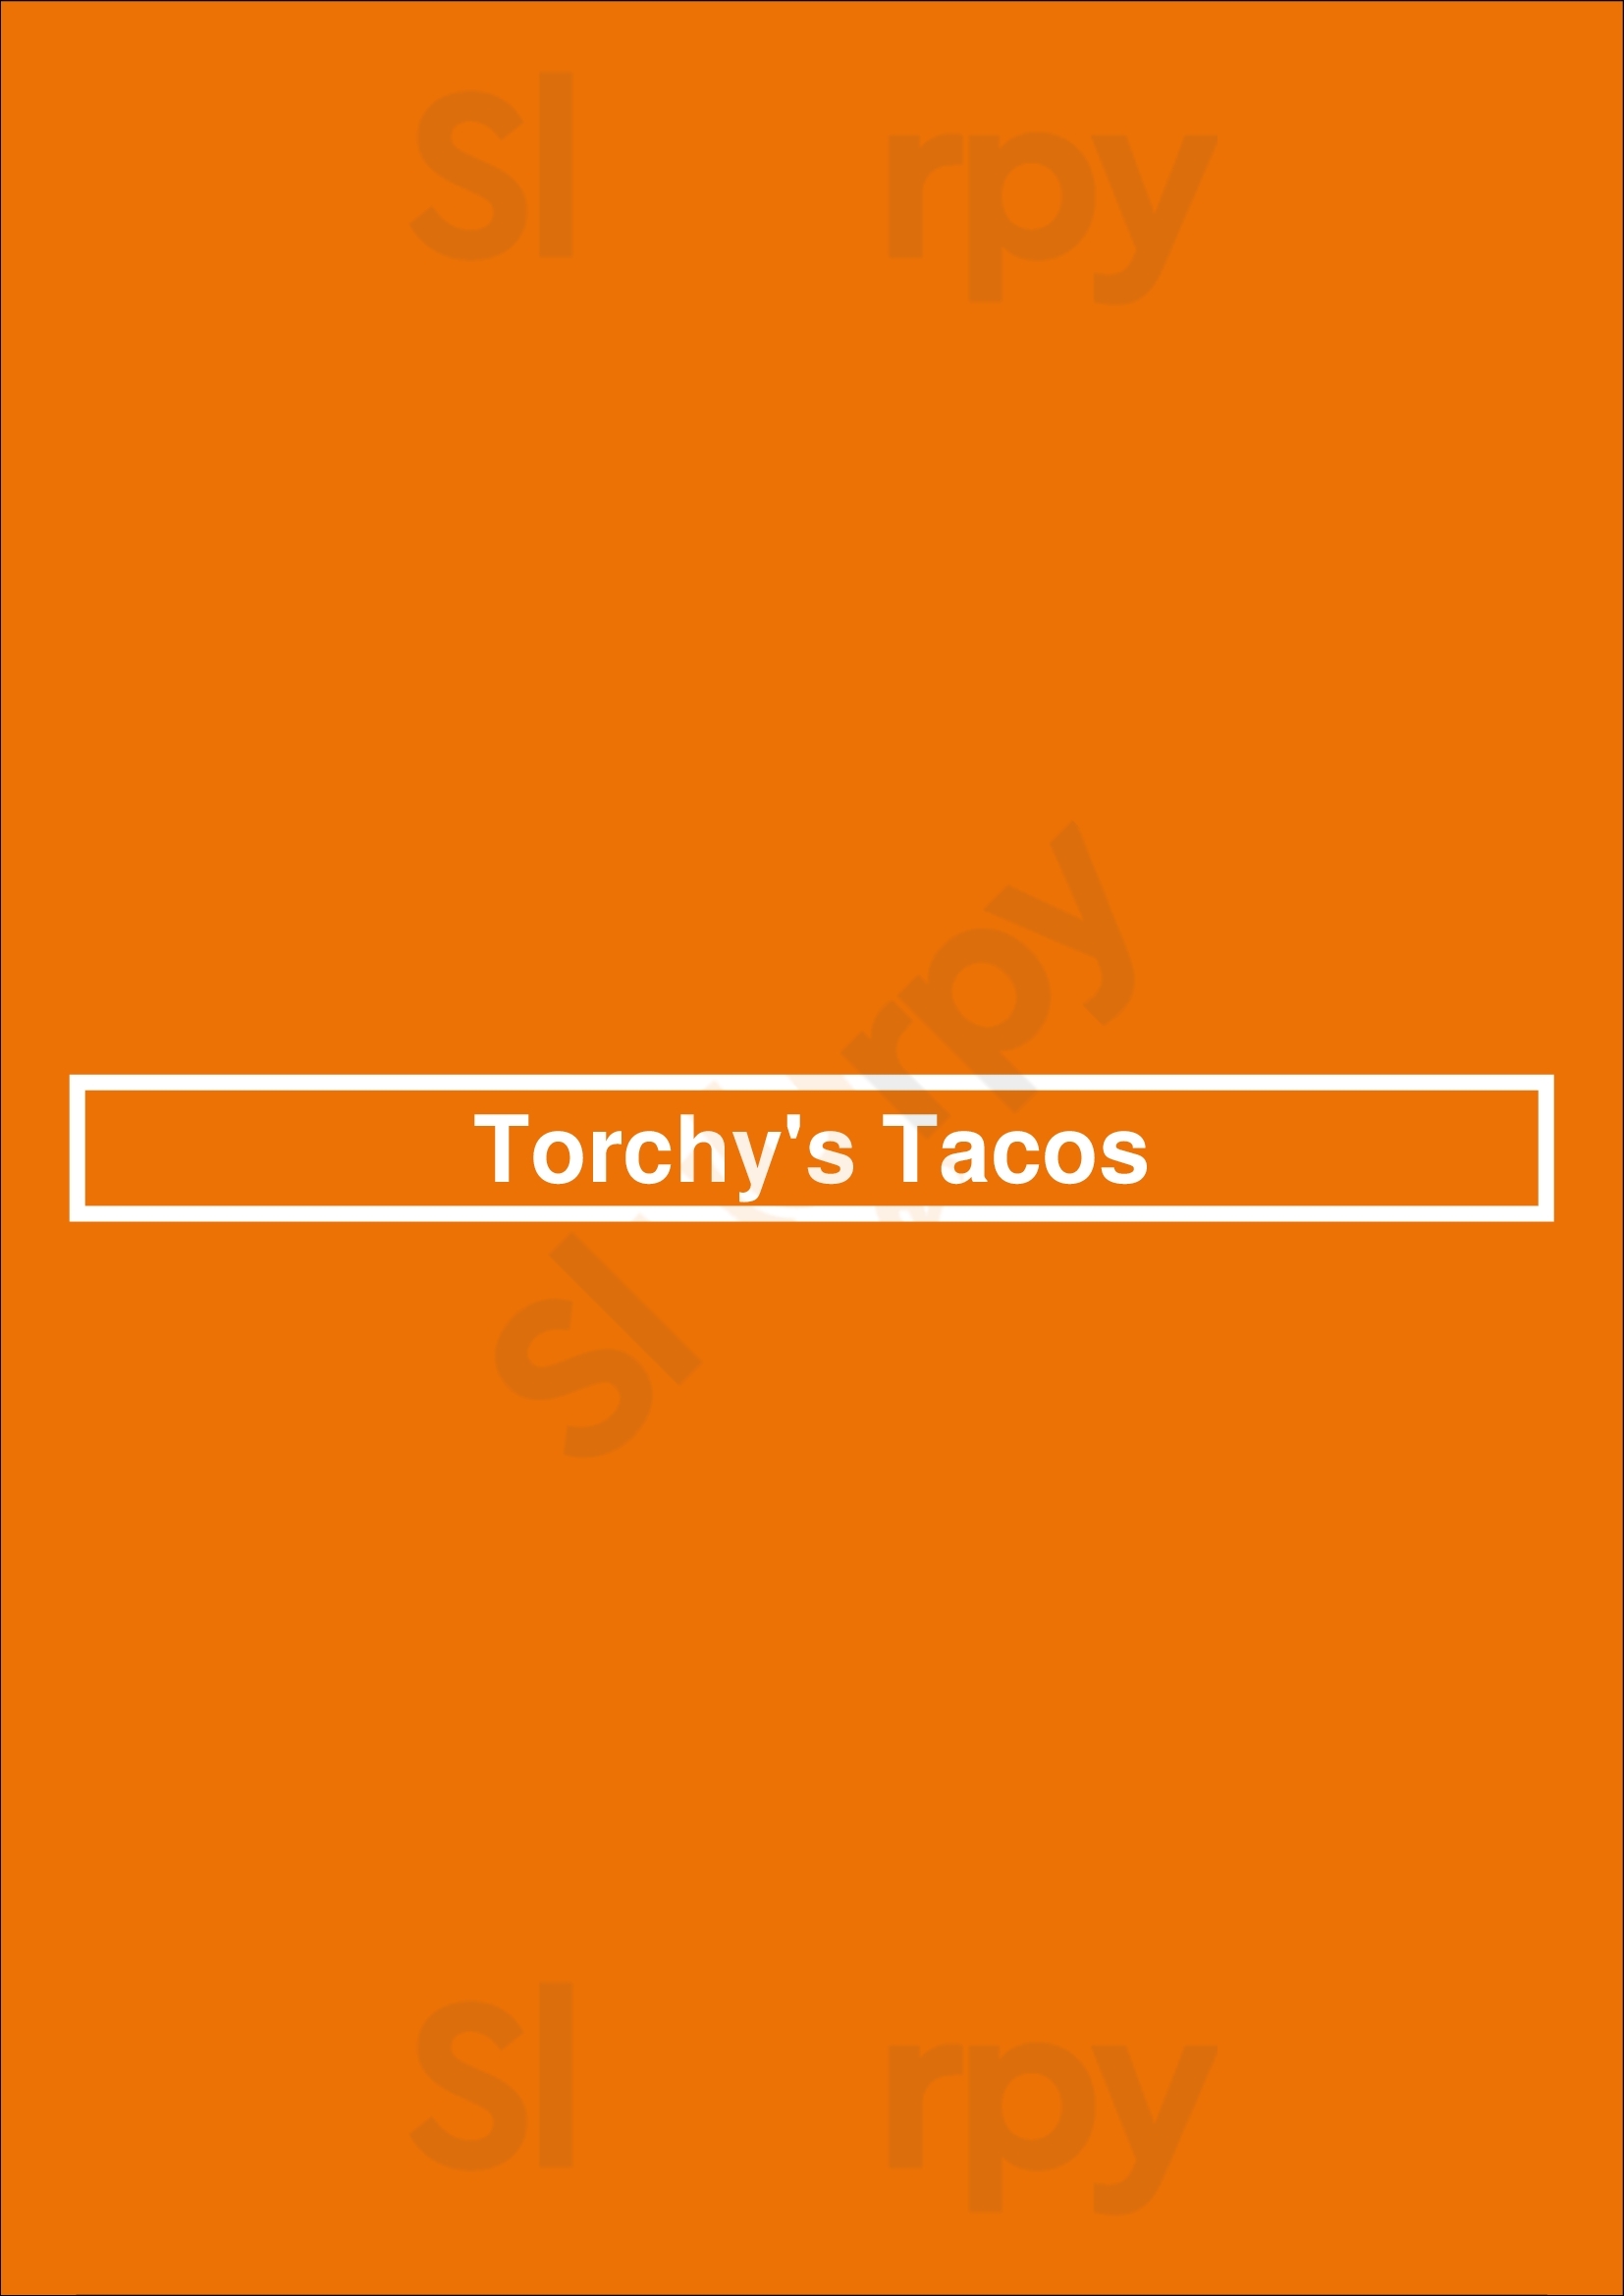 Torchys Tacos Fort Worth Menu - 1